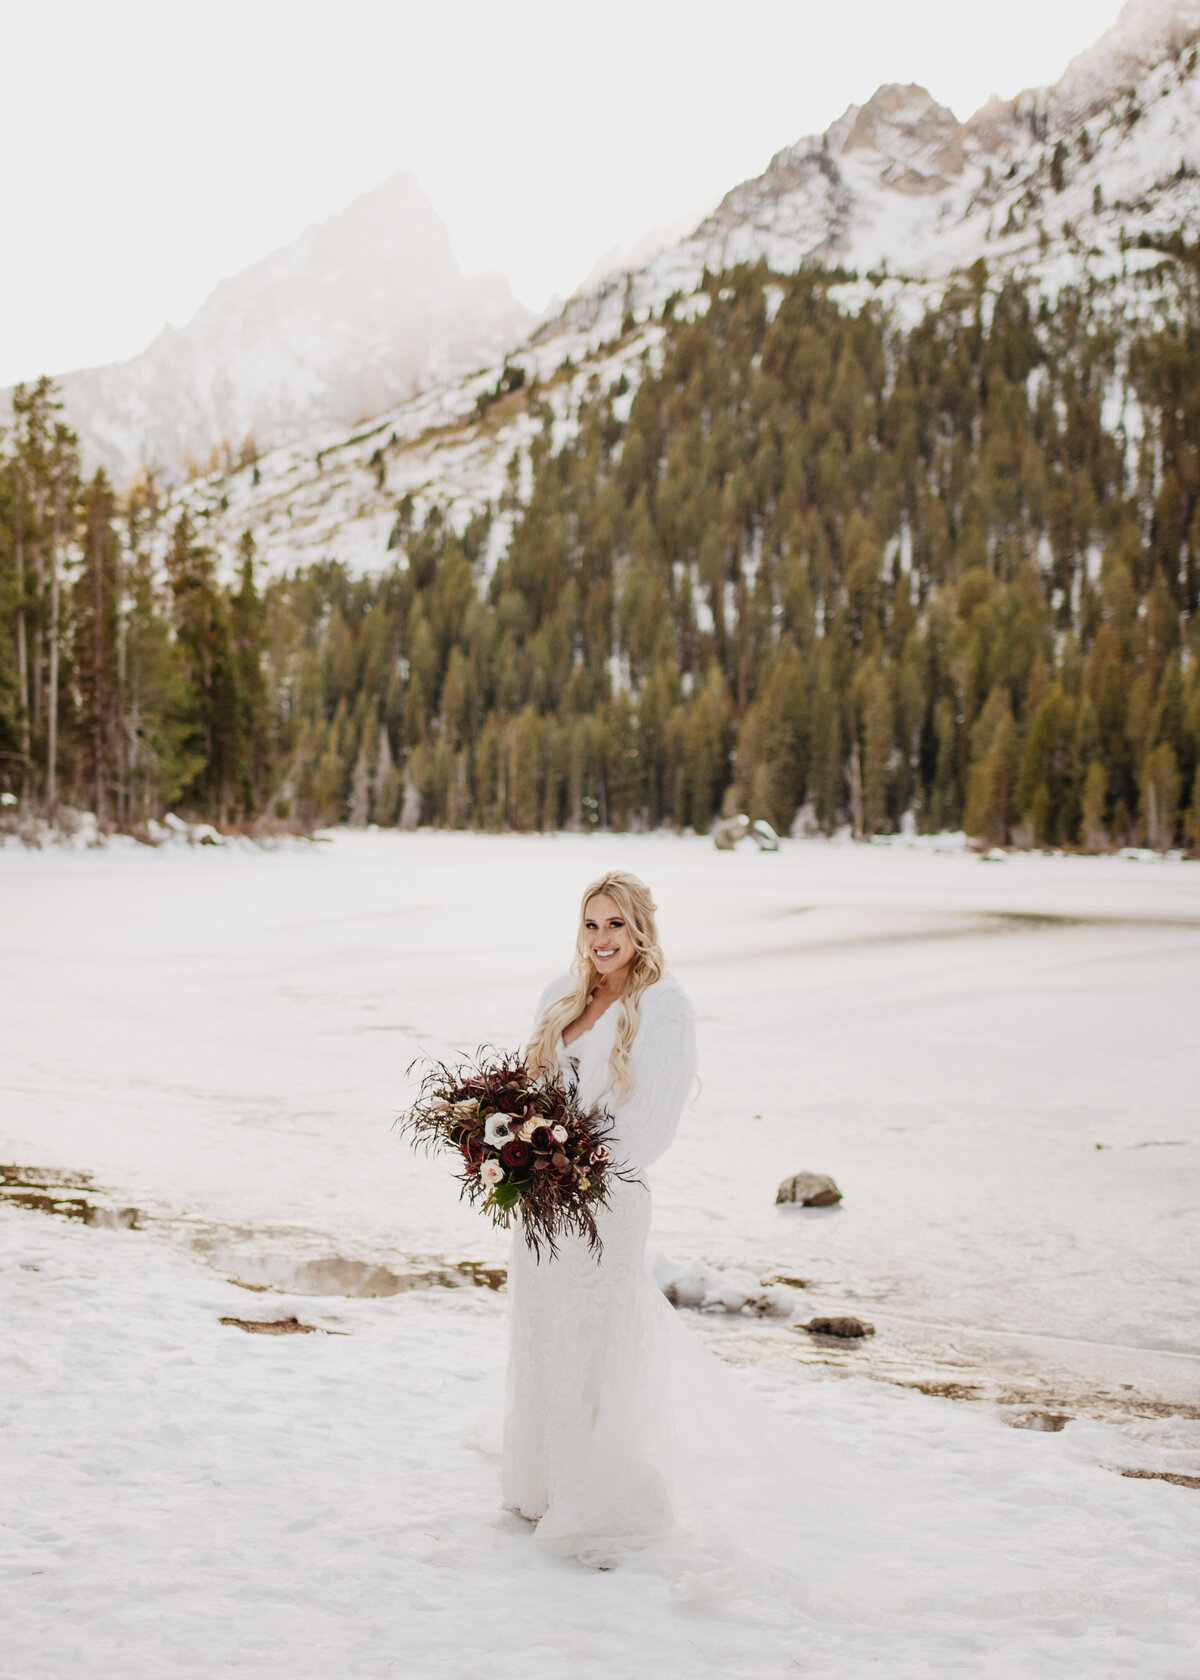 Jackson Hole Photographers capture bride in snow holding bouquet